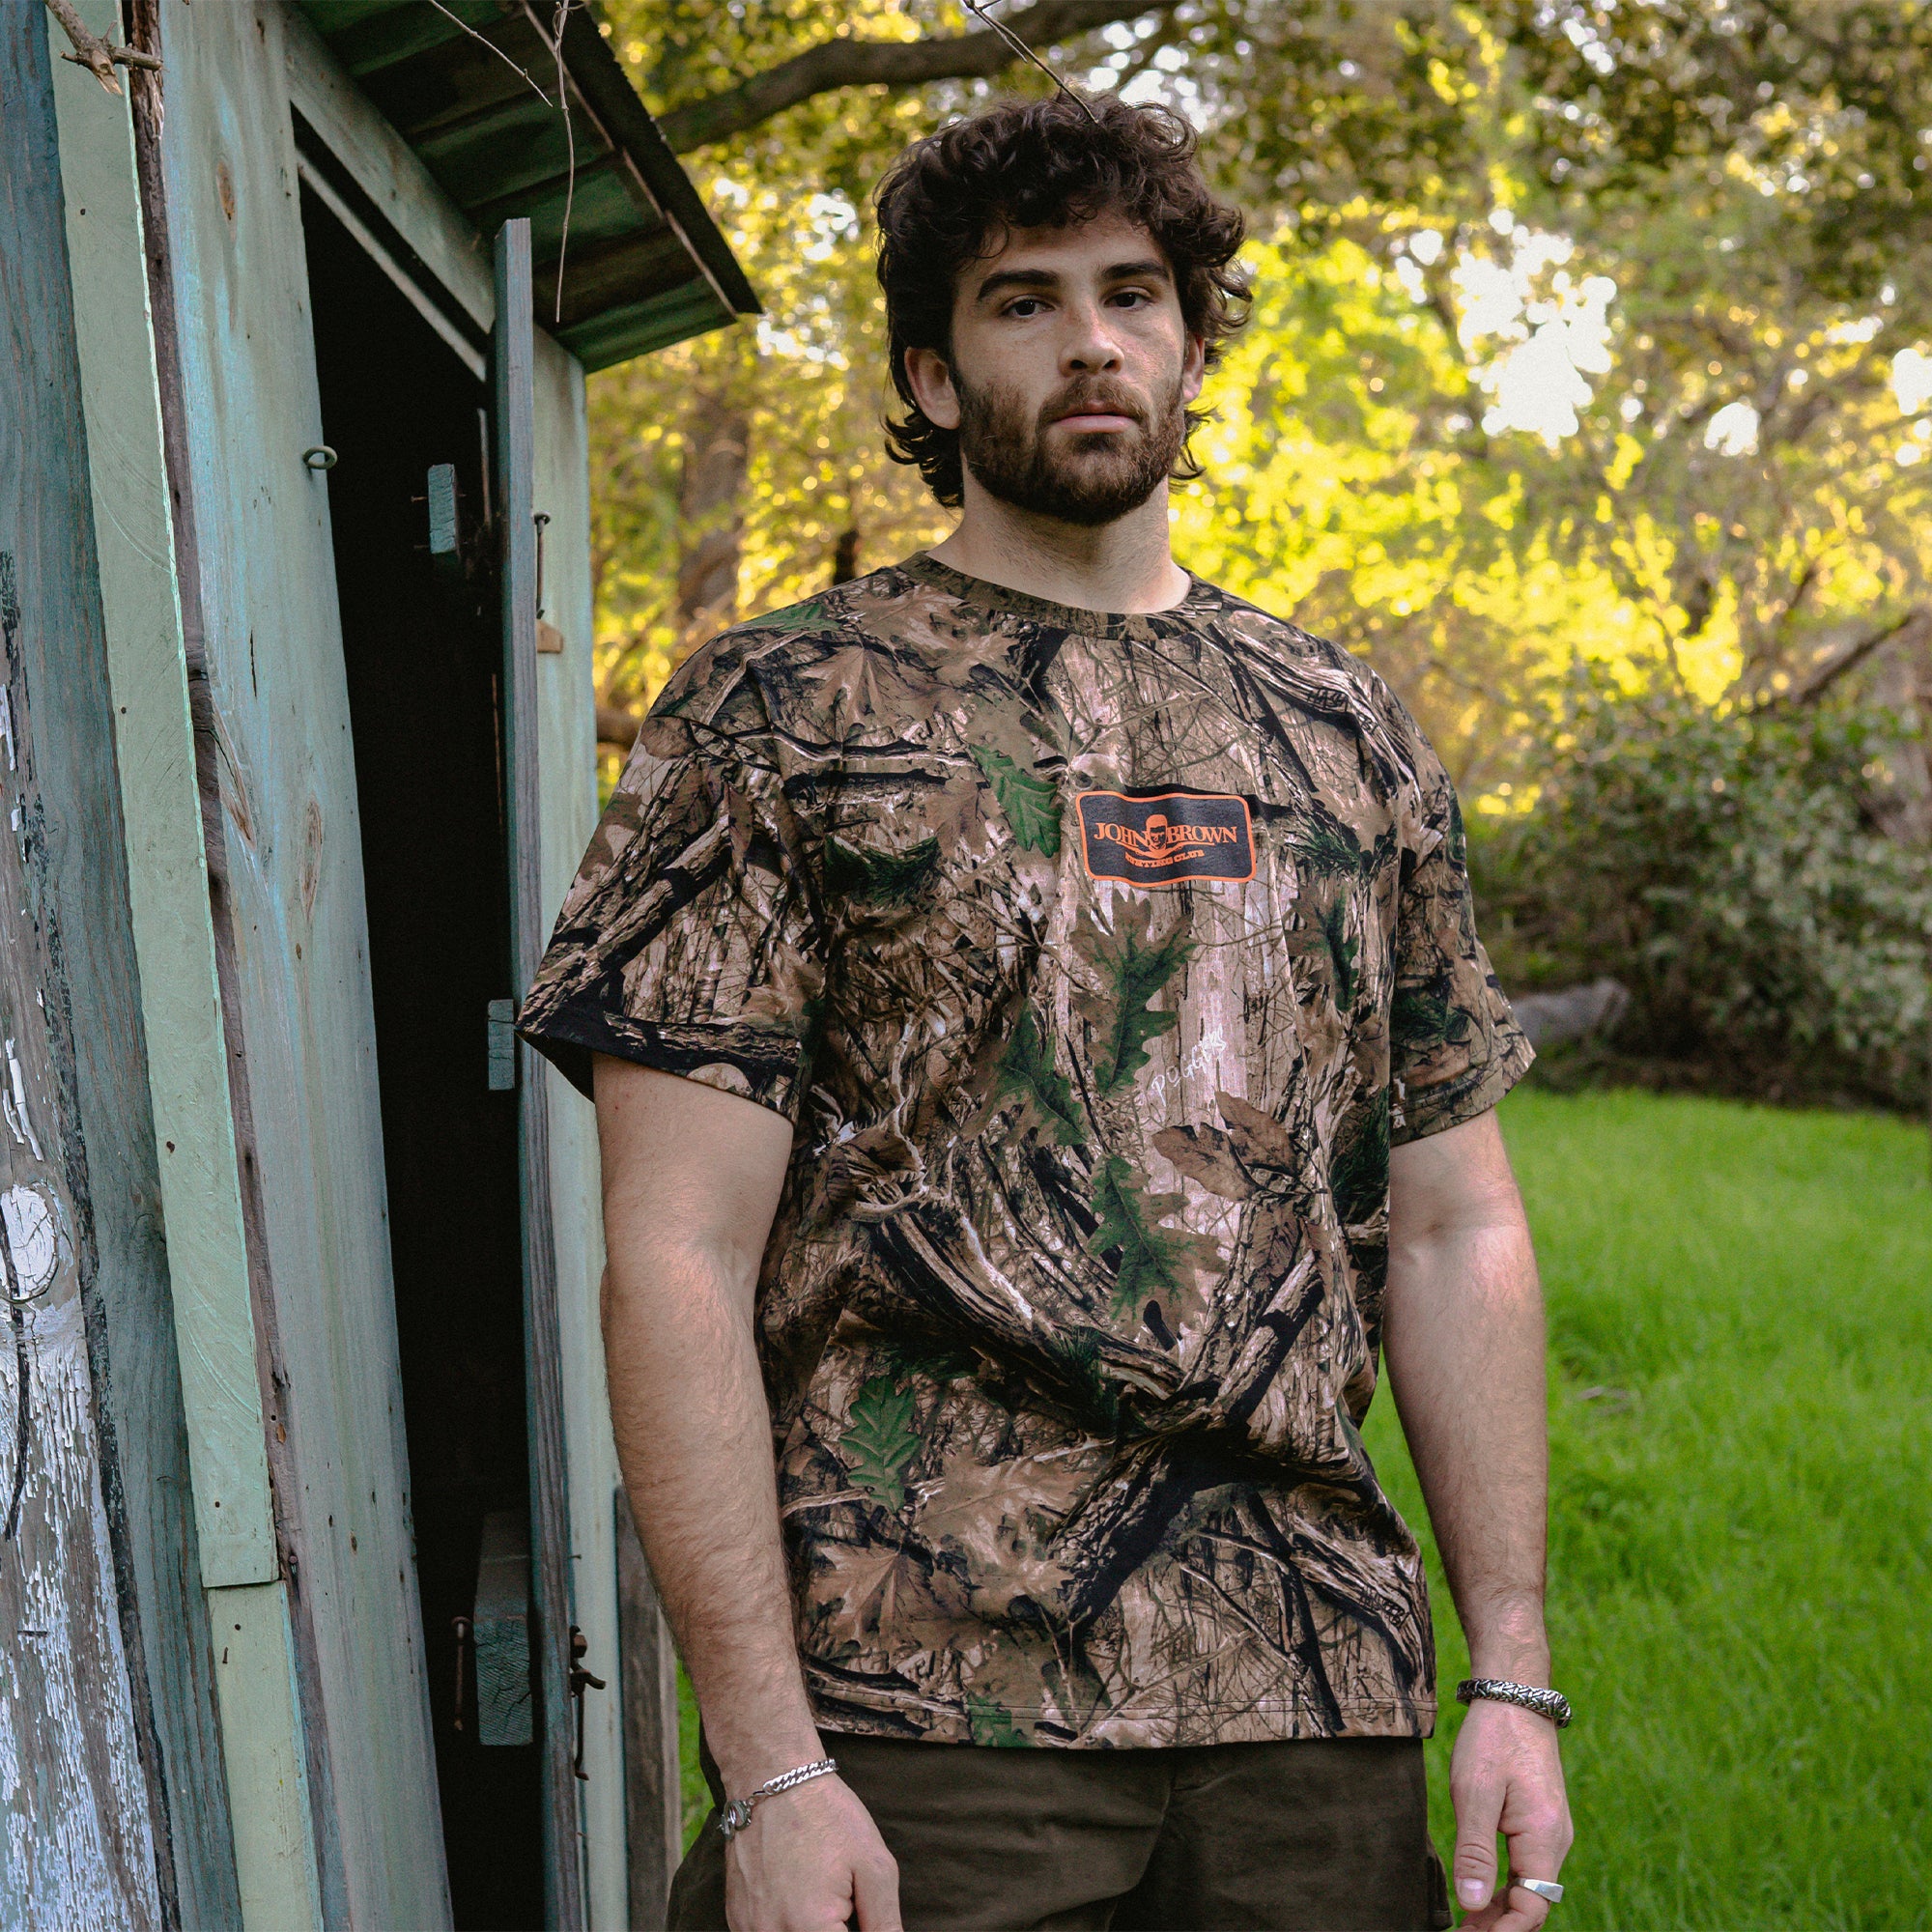 John Brown Hunting Club T-shirt – Hasan Piker